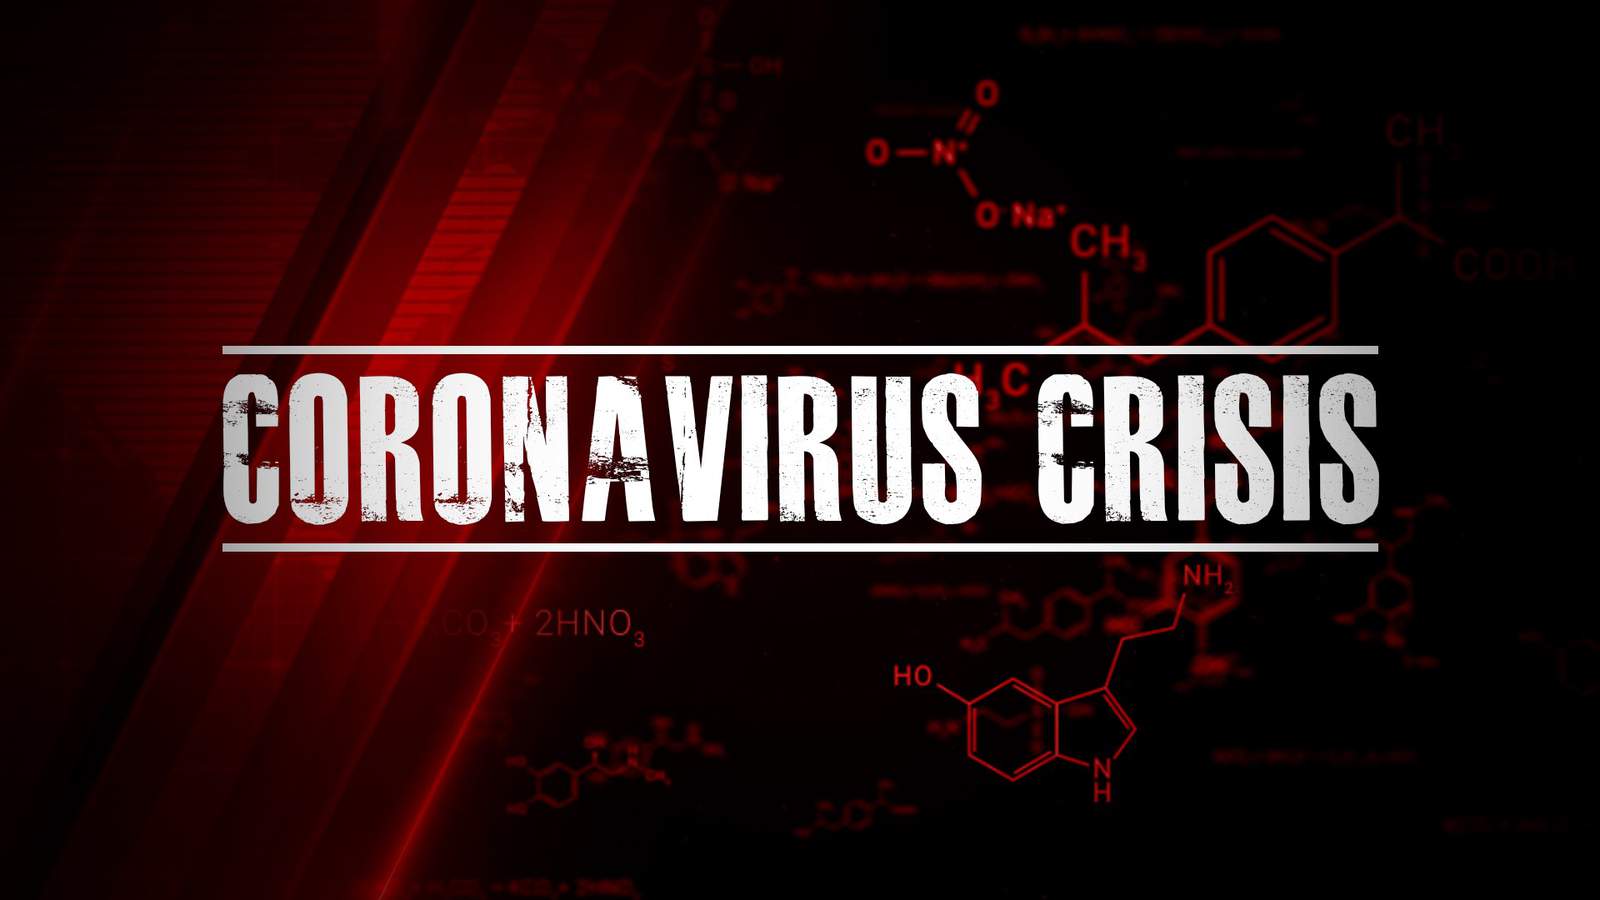 Man back from California is 1st coronavirus case near Dallas